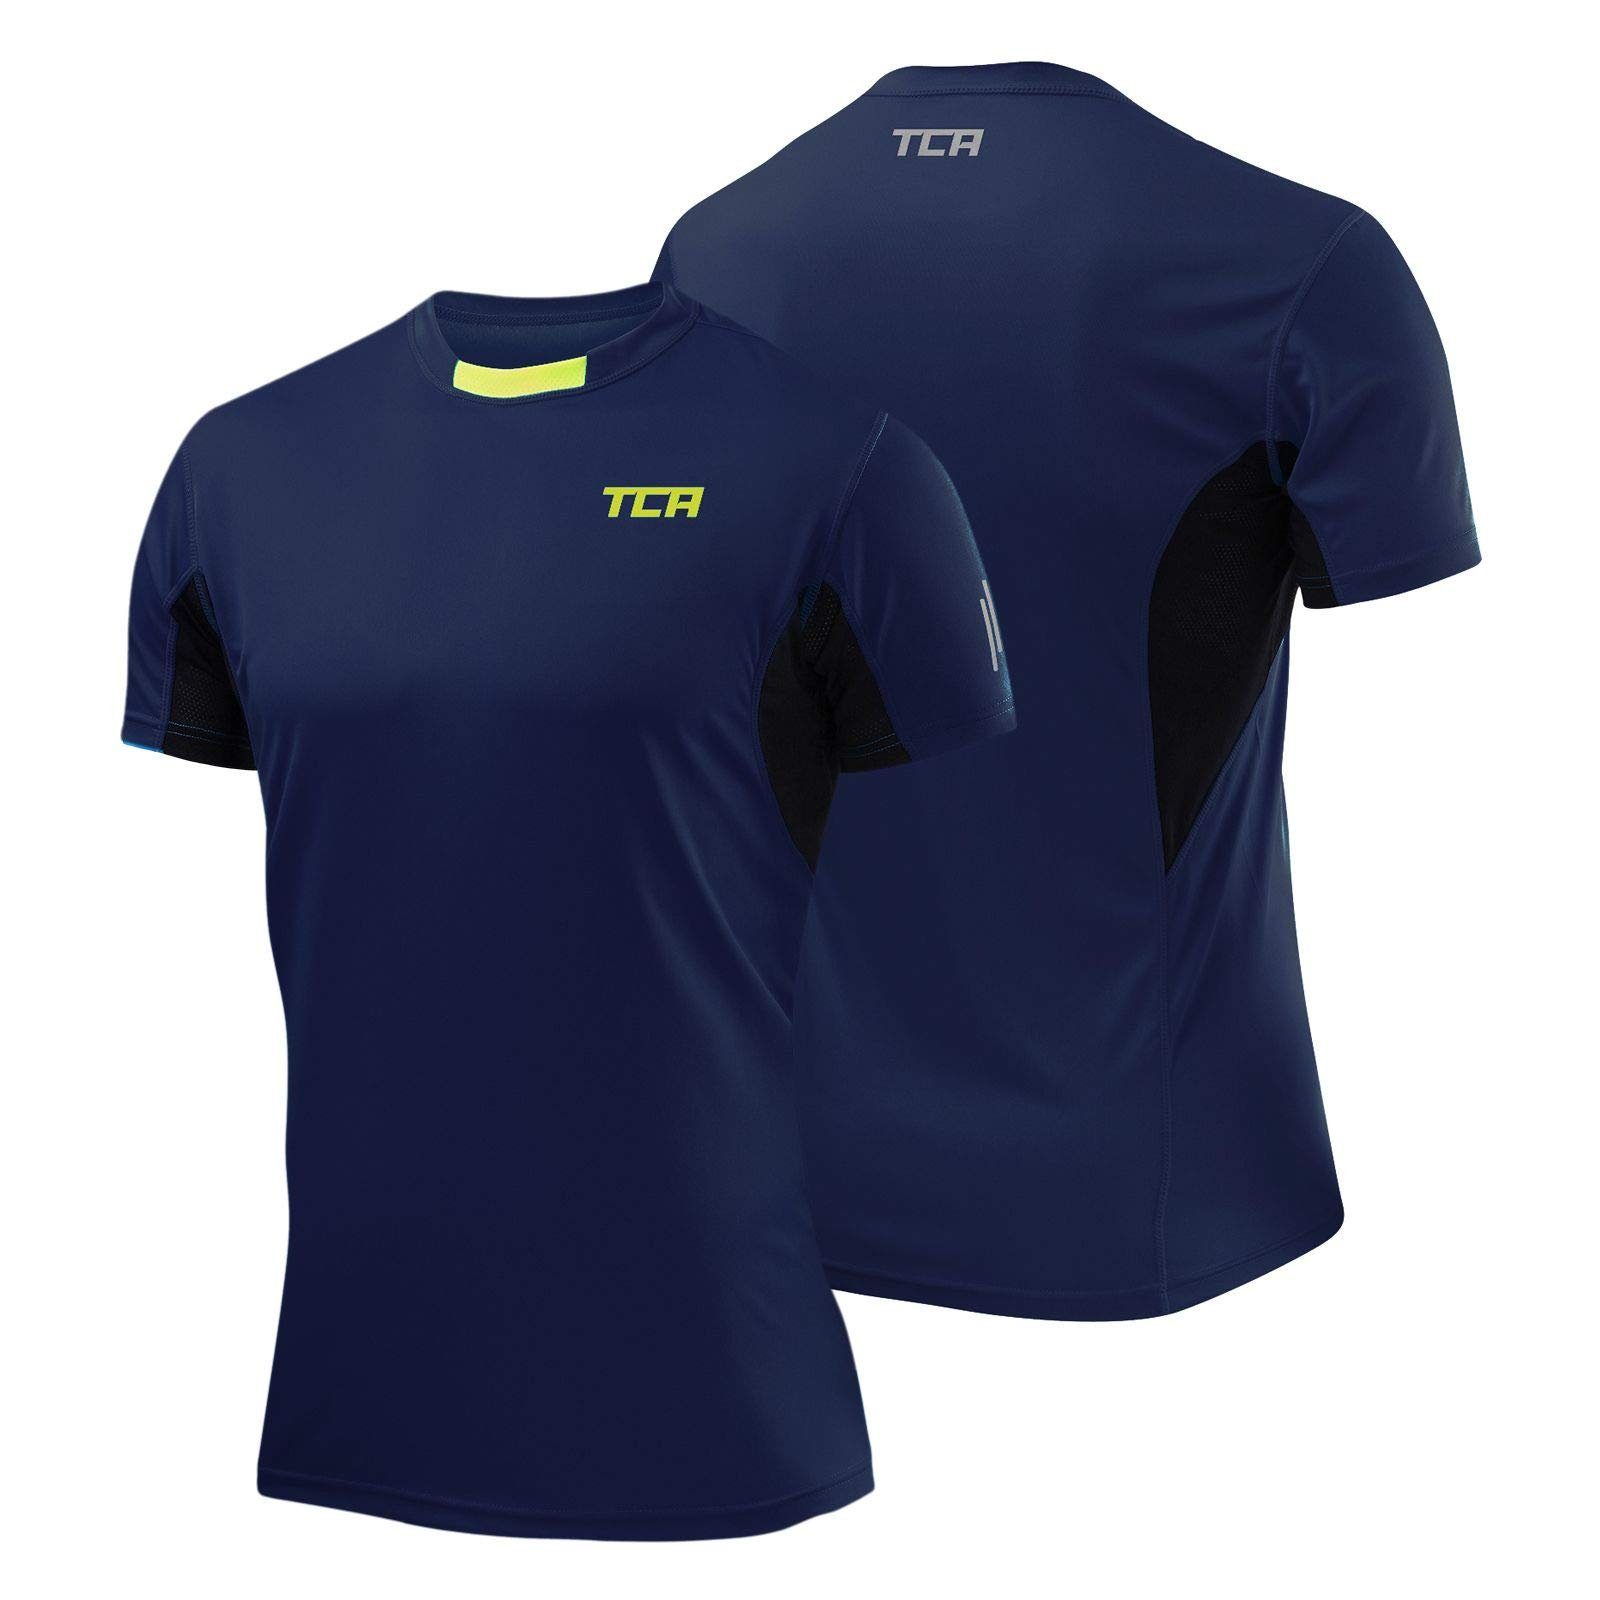 Atomic XXL T-Shirt TCA Herren - T-Shirt Dunkelblau, TCA